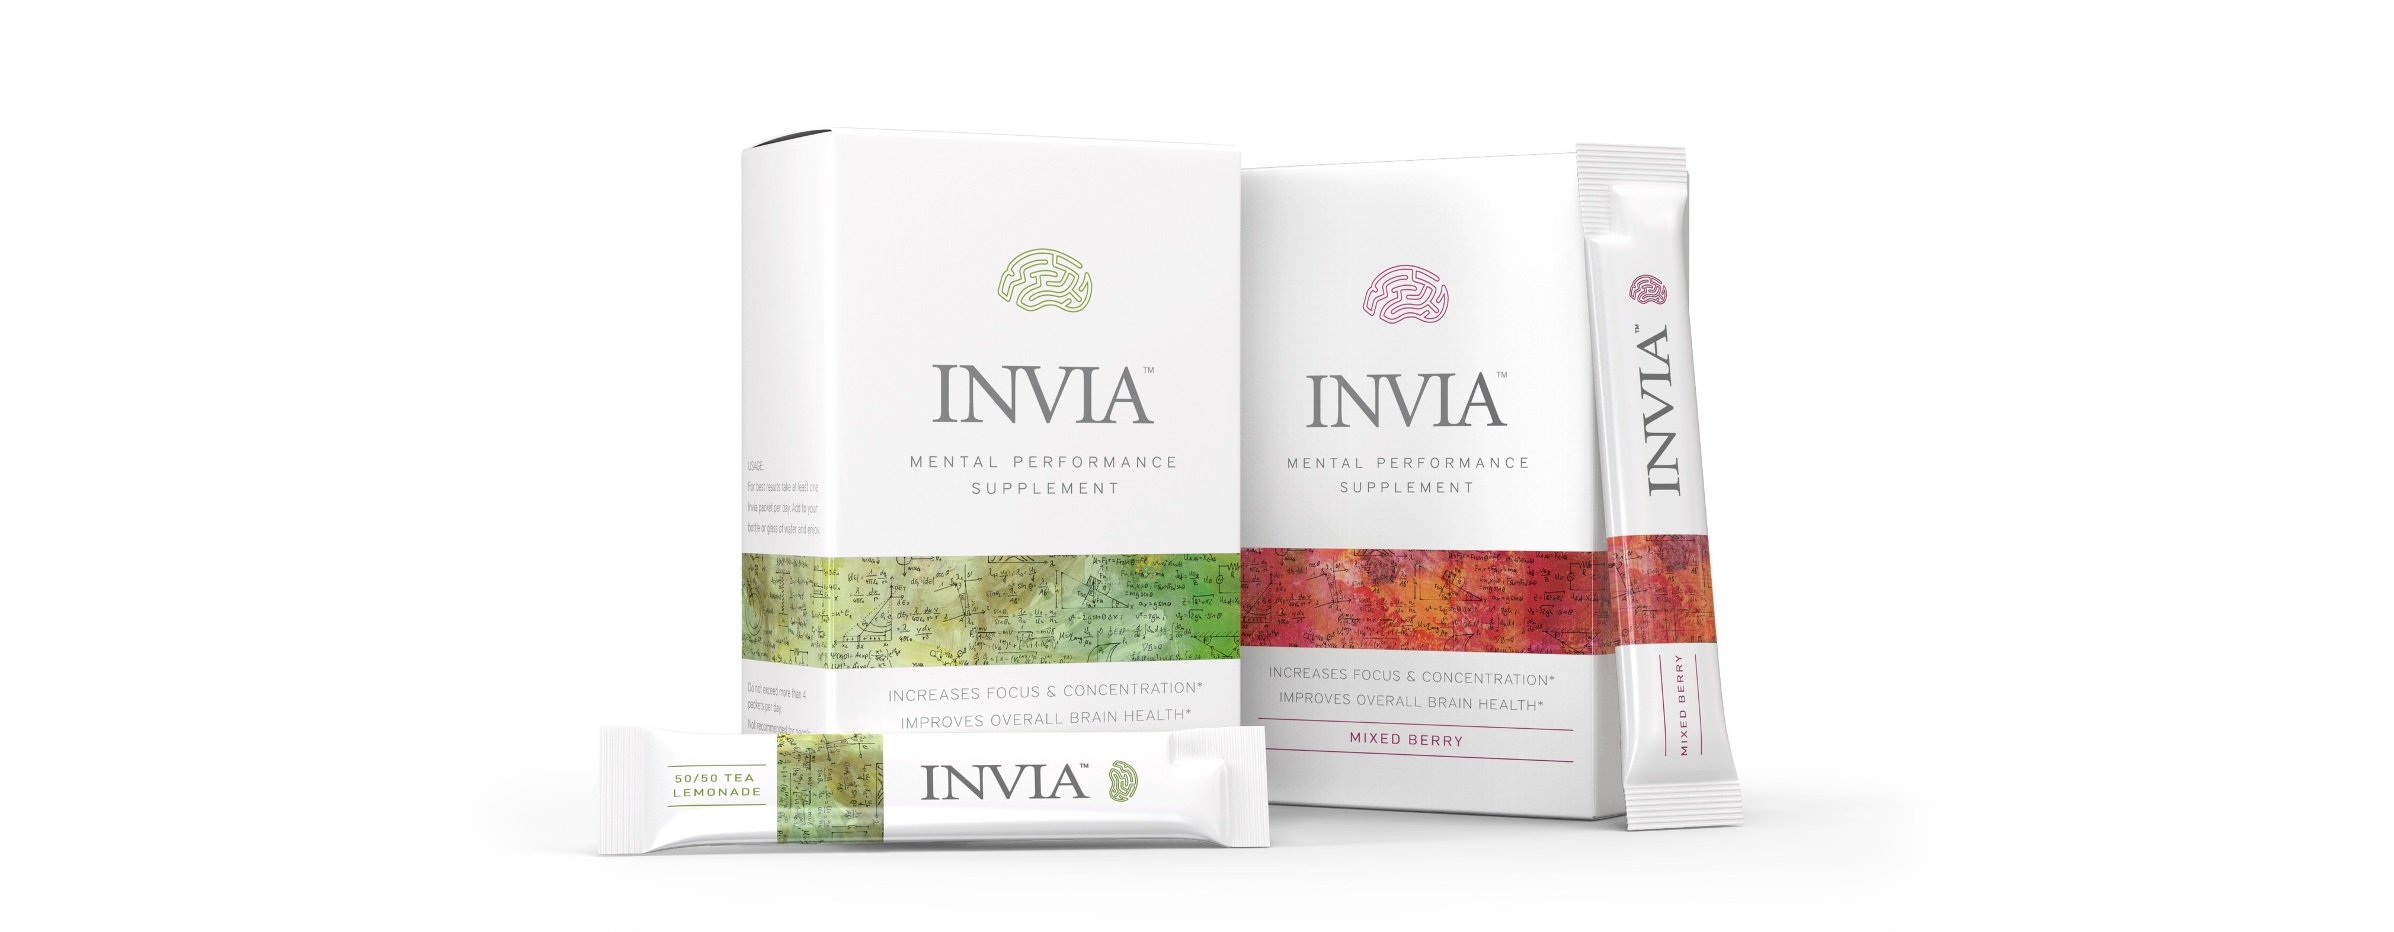 New INVIA Mental Performance Drink Mix Supplement